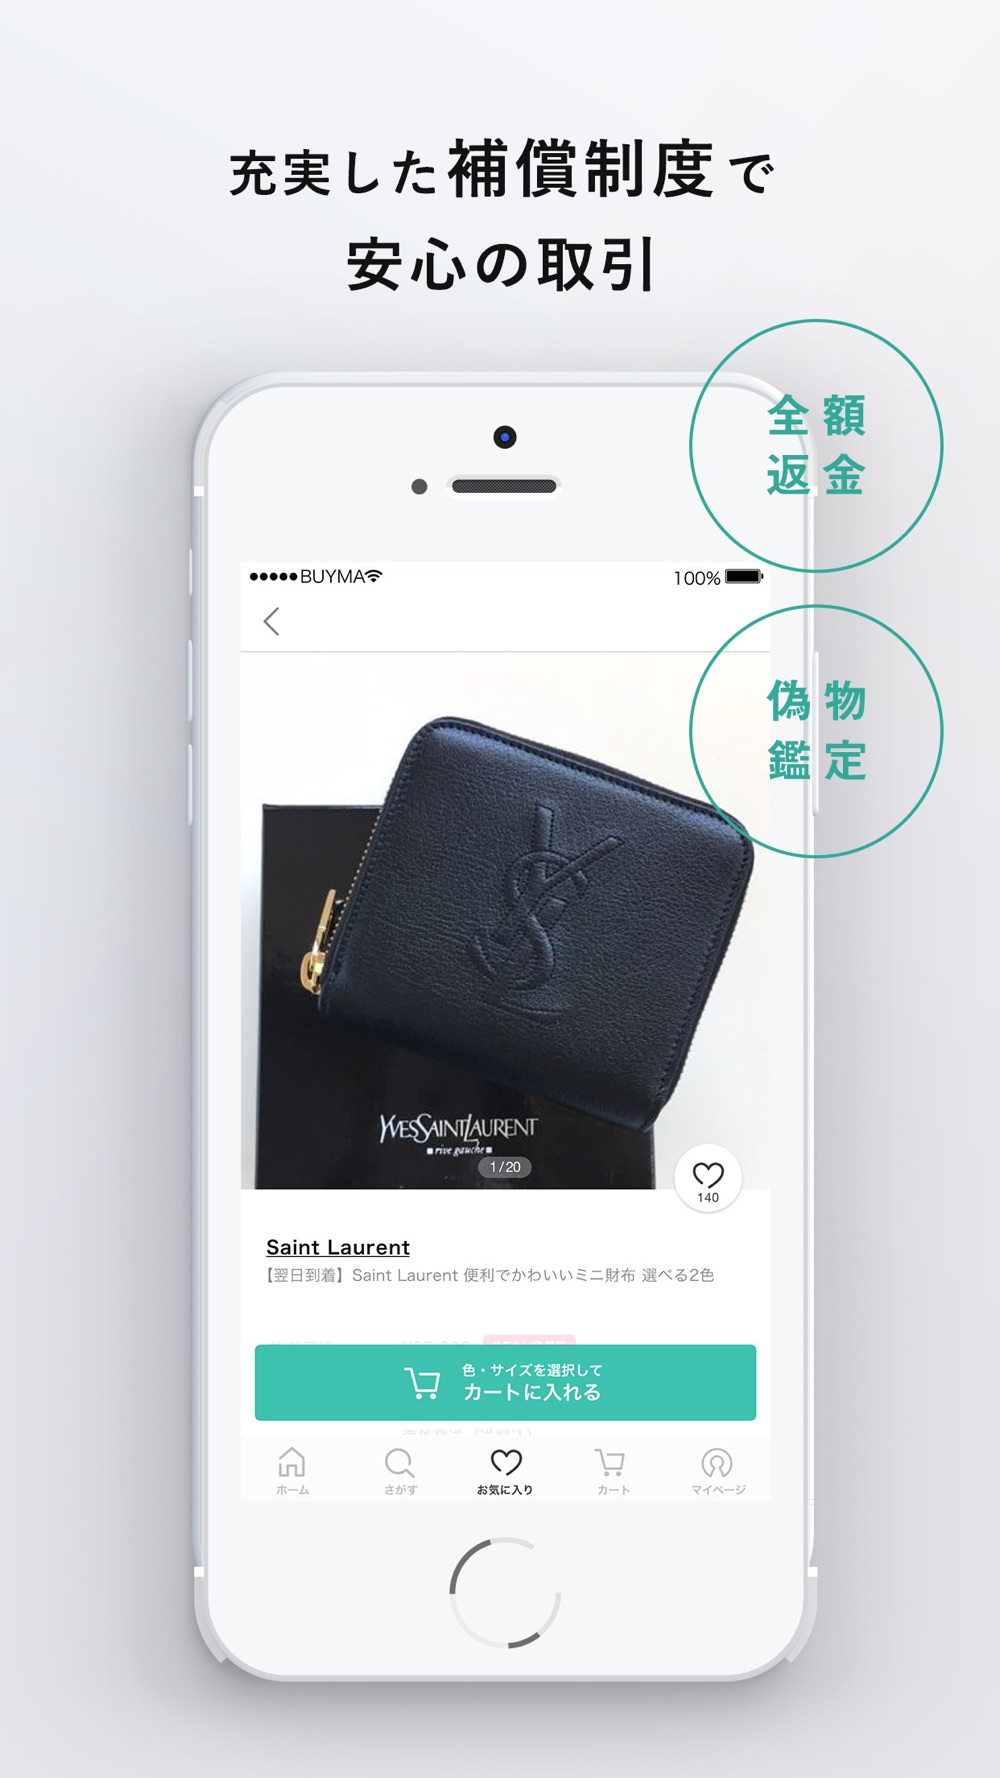 Buymaバイマ 海外ファッション通販アプリ Free Download App For Iphone Steprimo Com